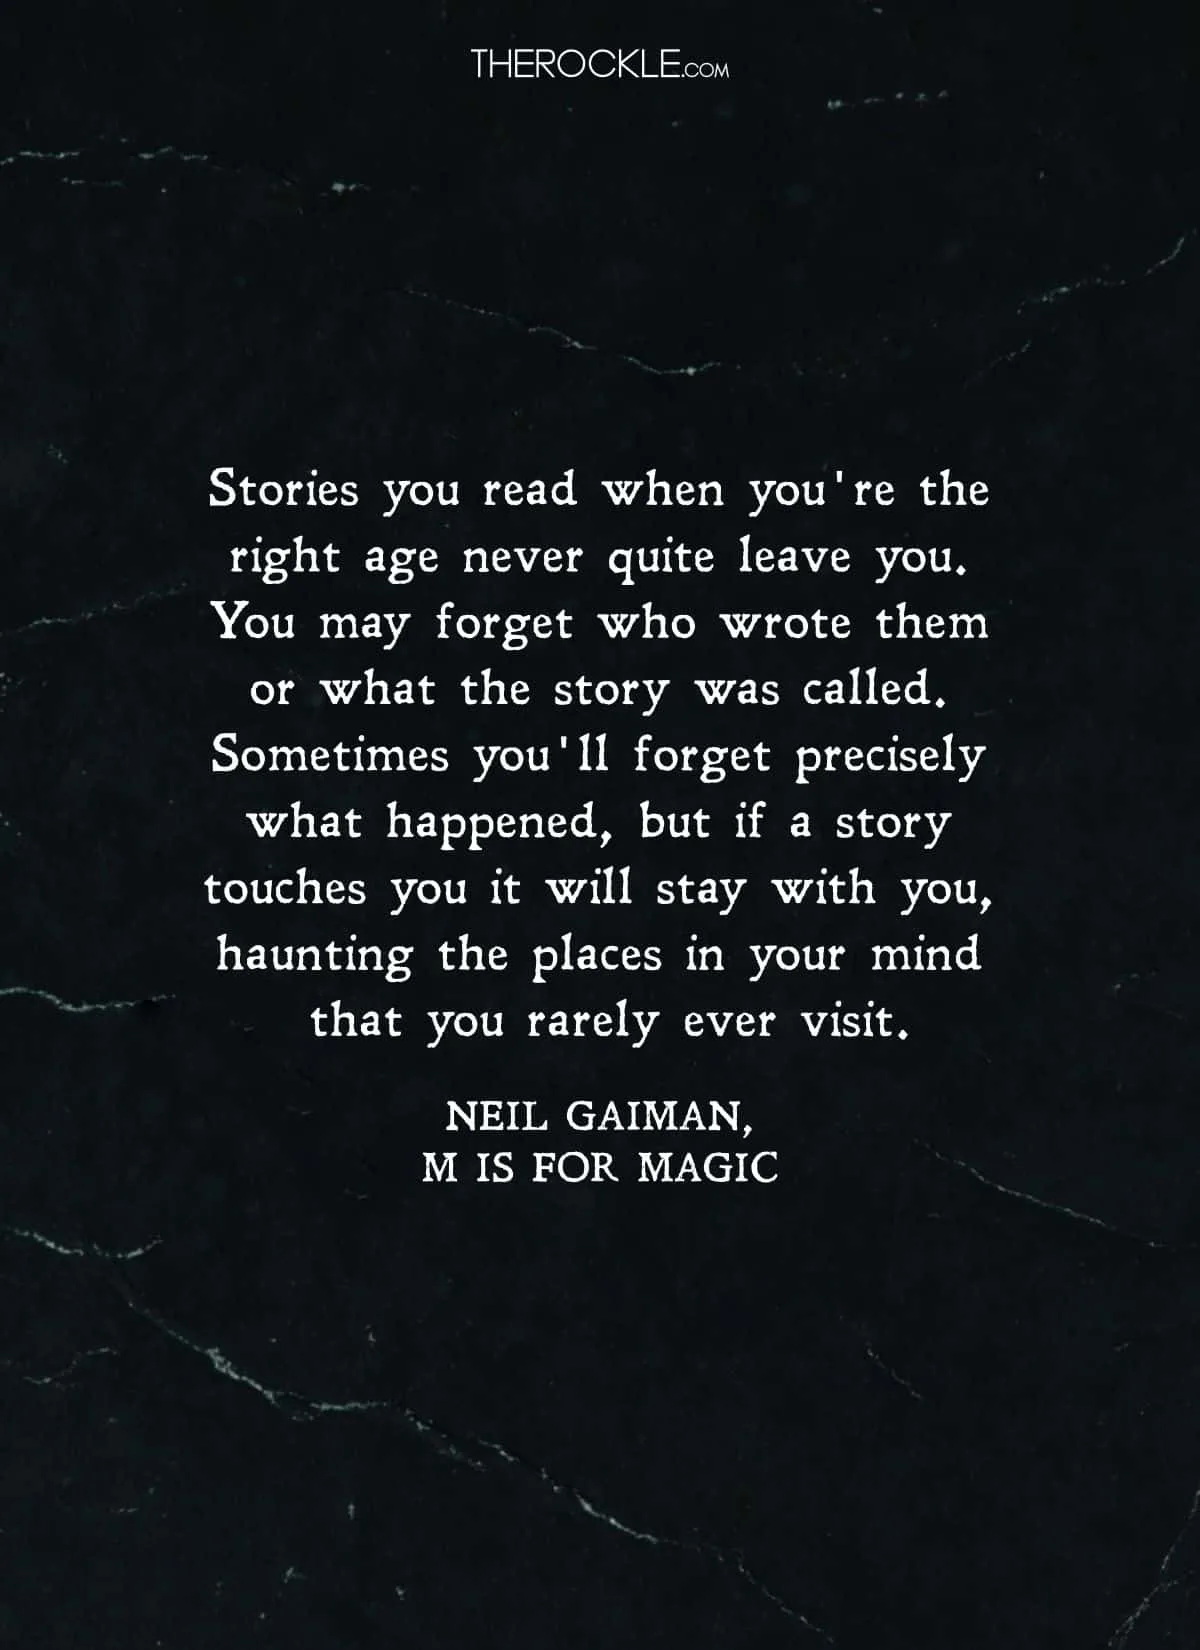 Neil Gaiman on the impact of stories